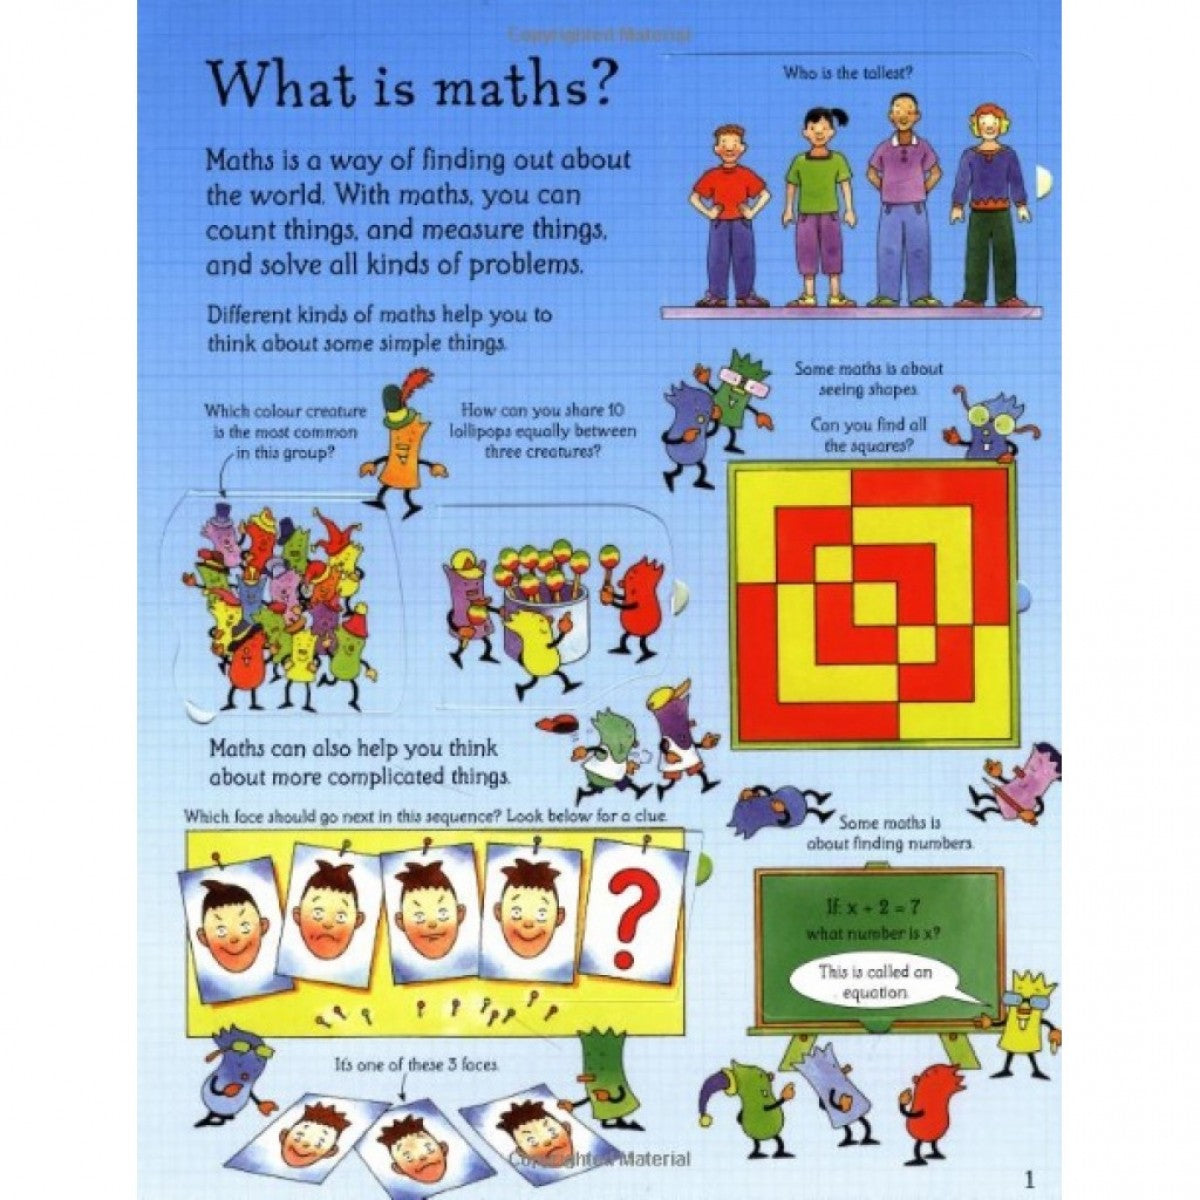 See Inside Maths